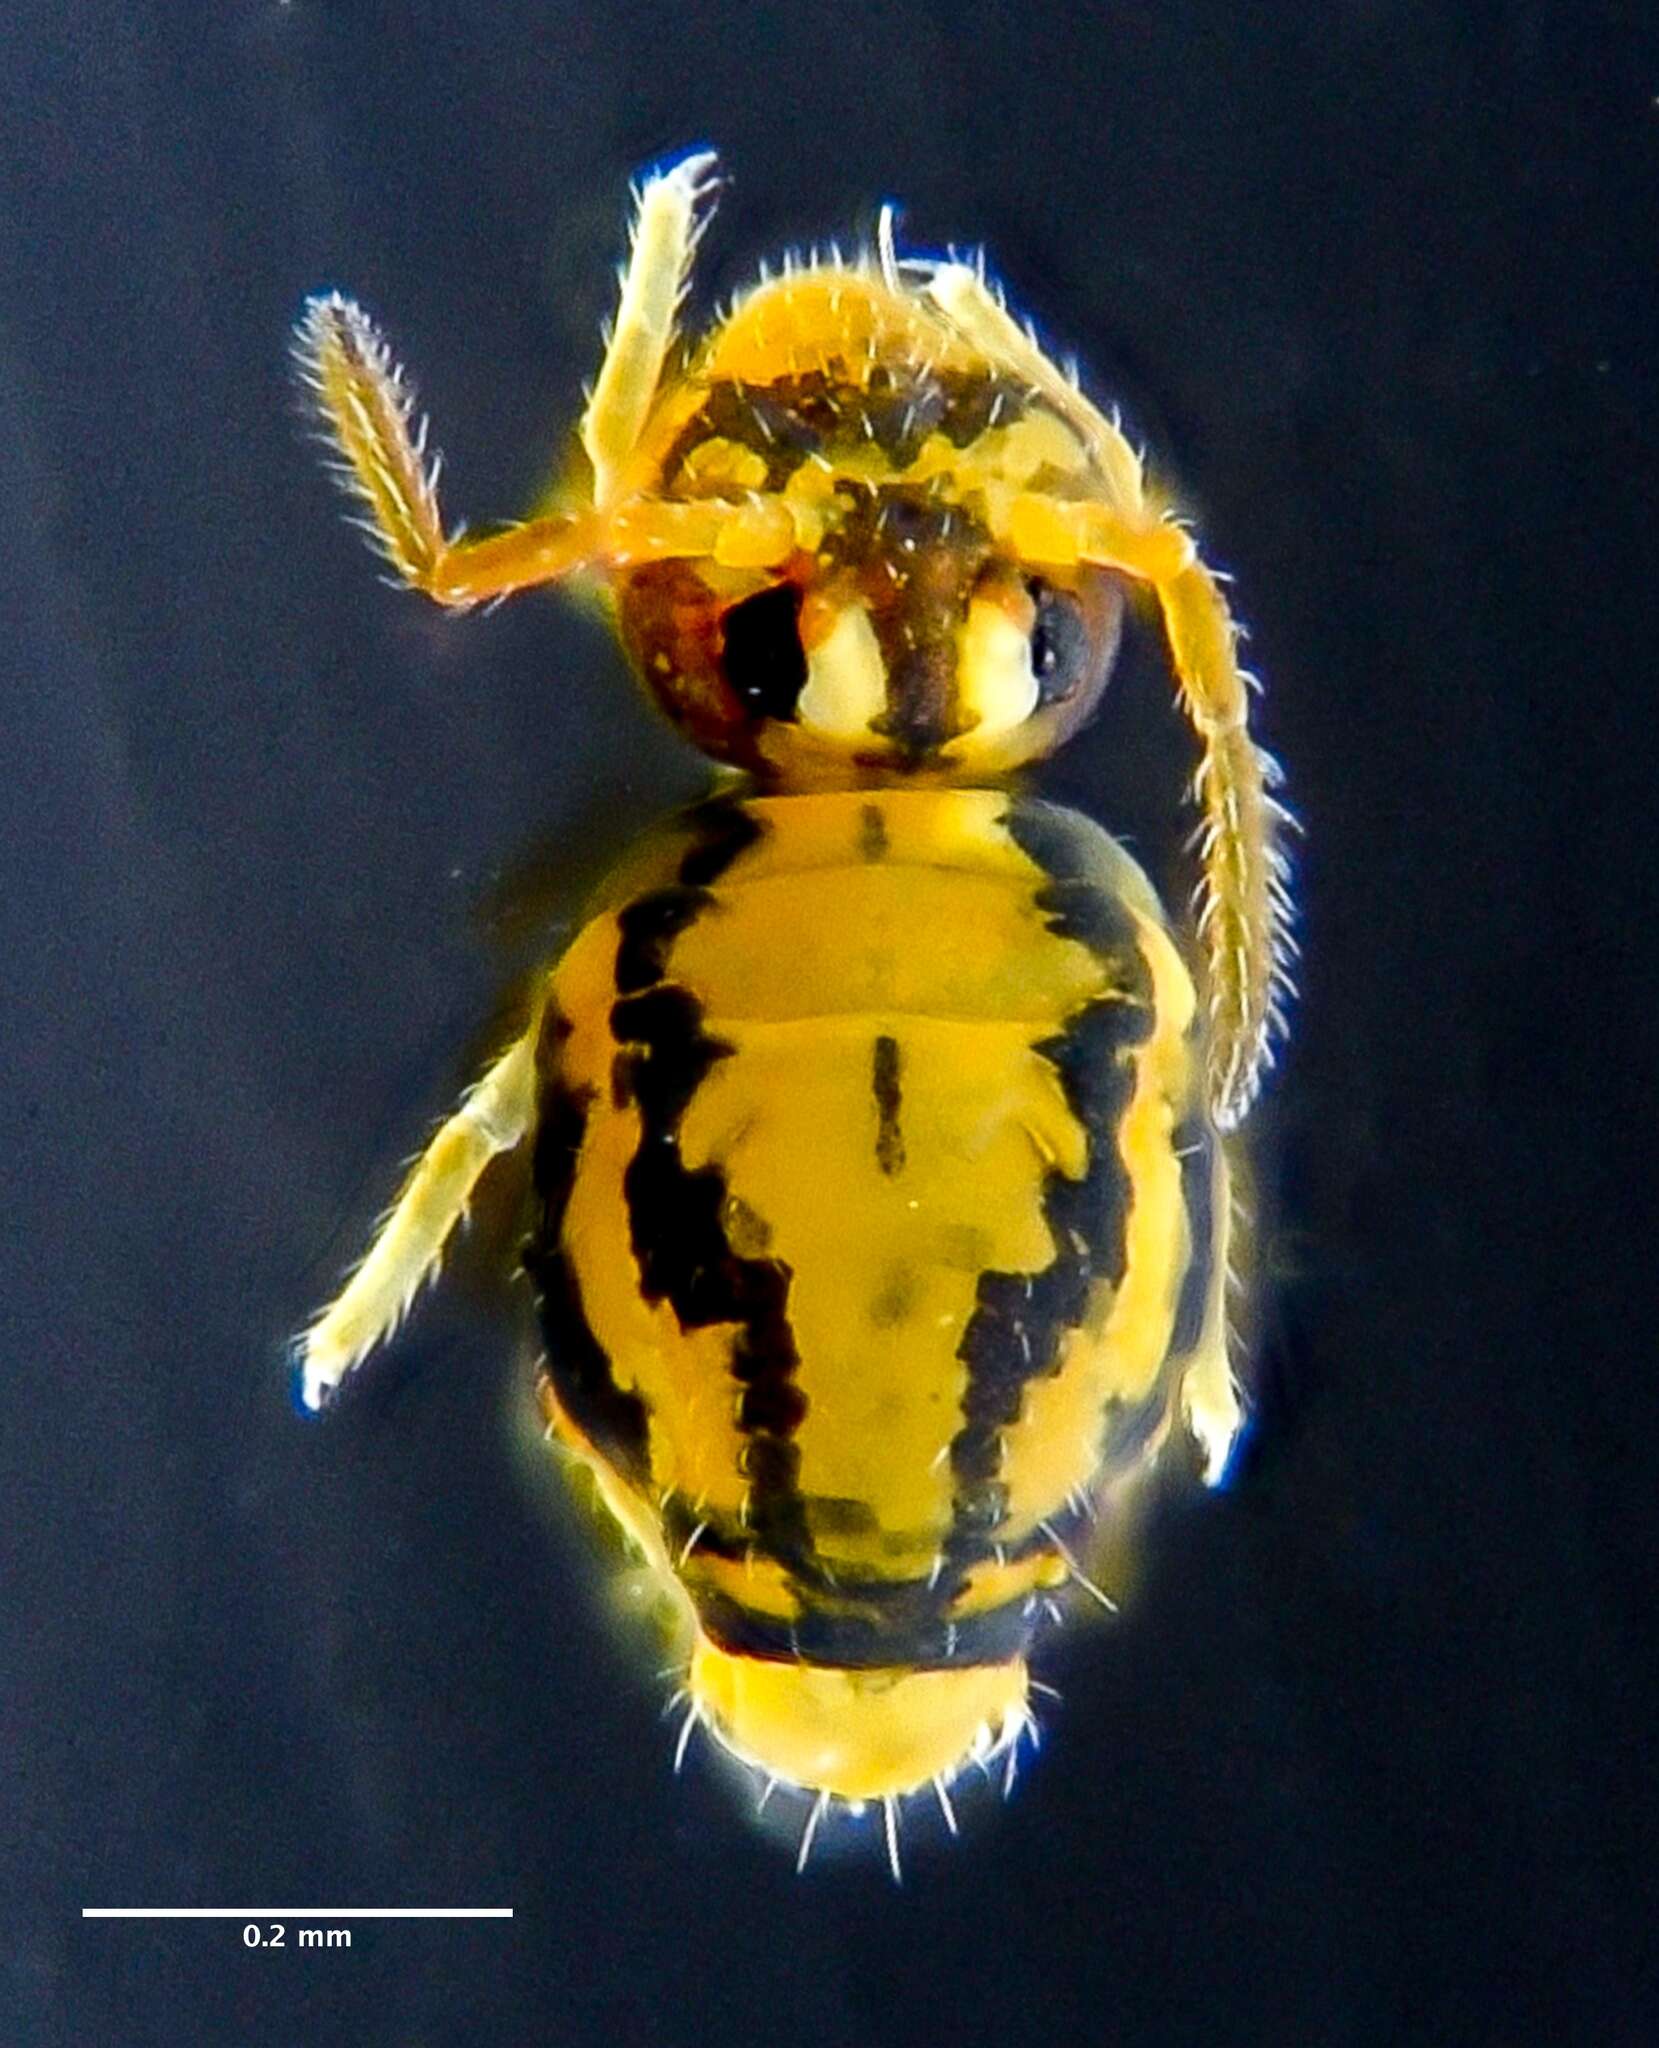 Image of Globular springtail